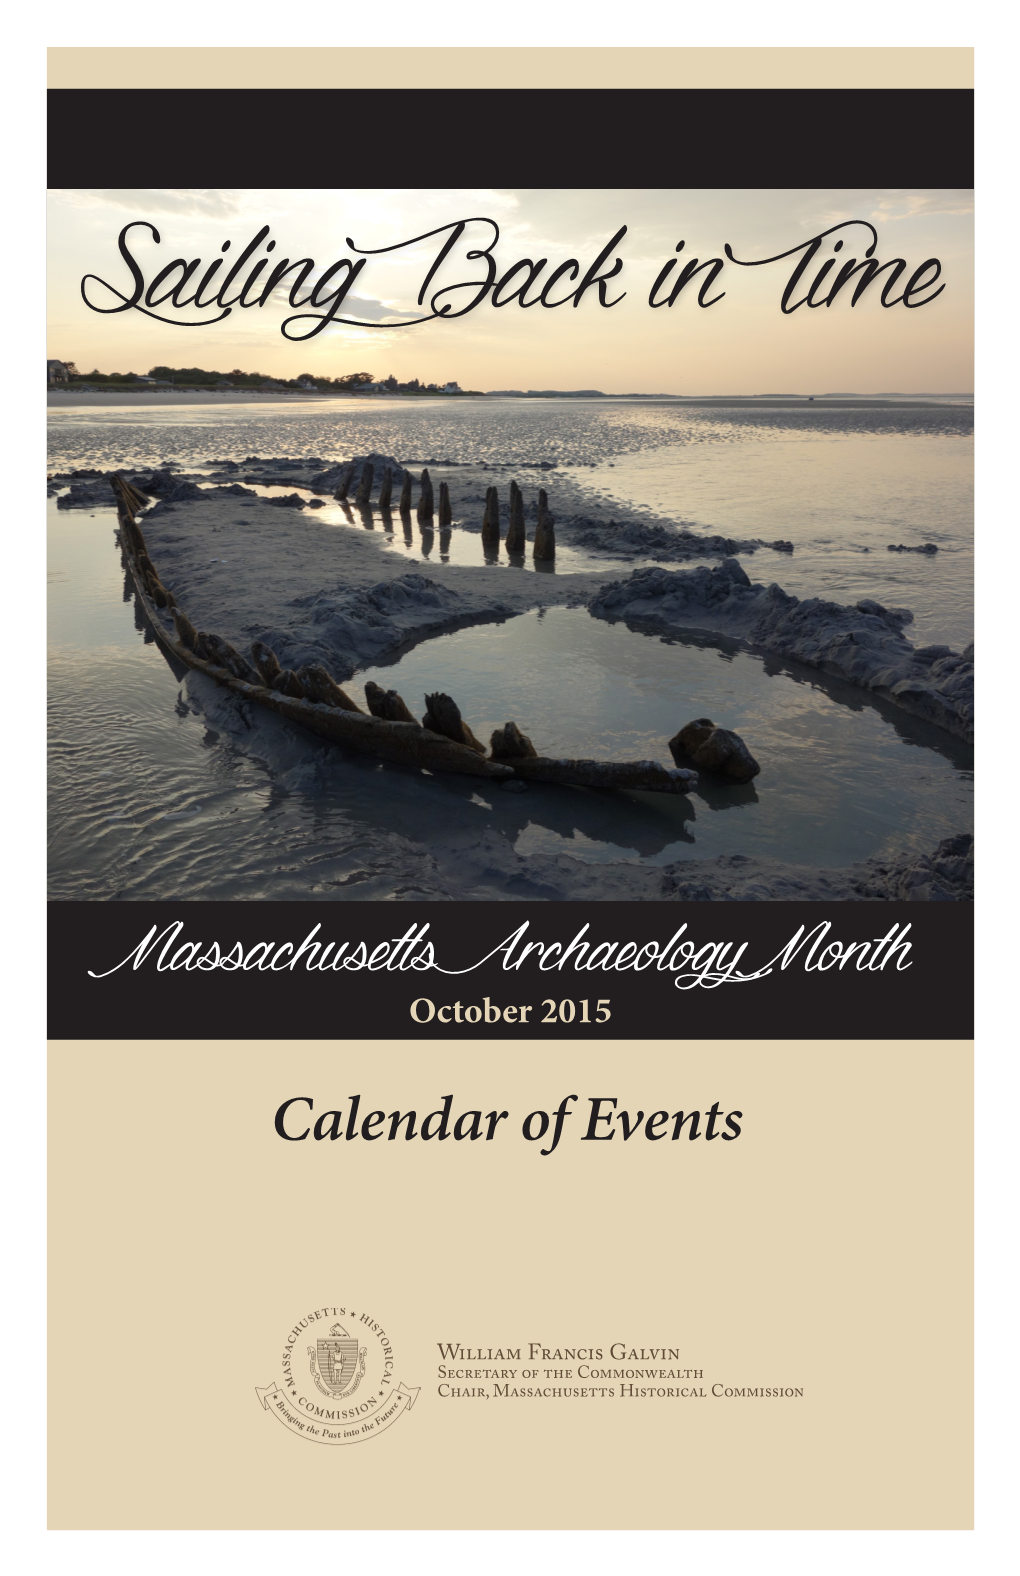 Massachusetts Archaeology Month October 2015 Calendar of Events